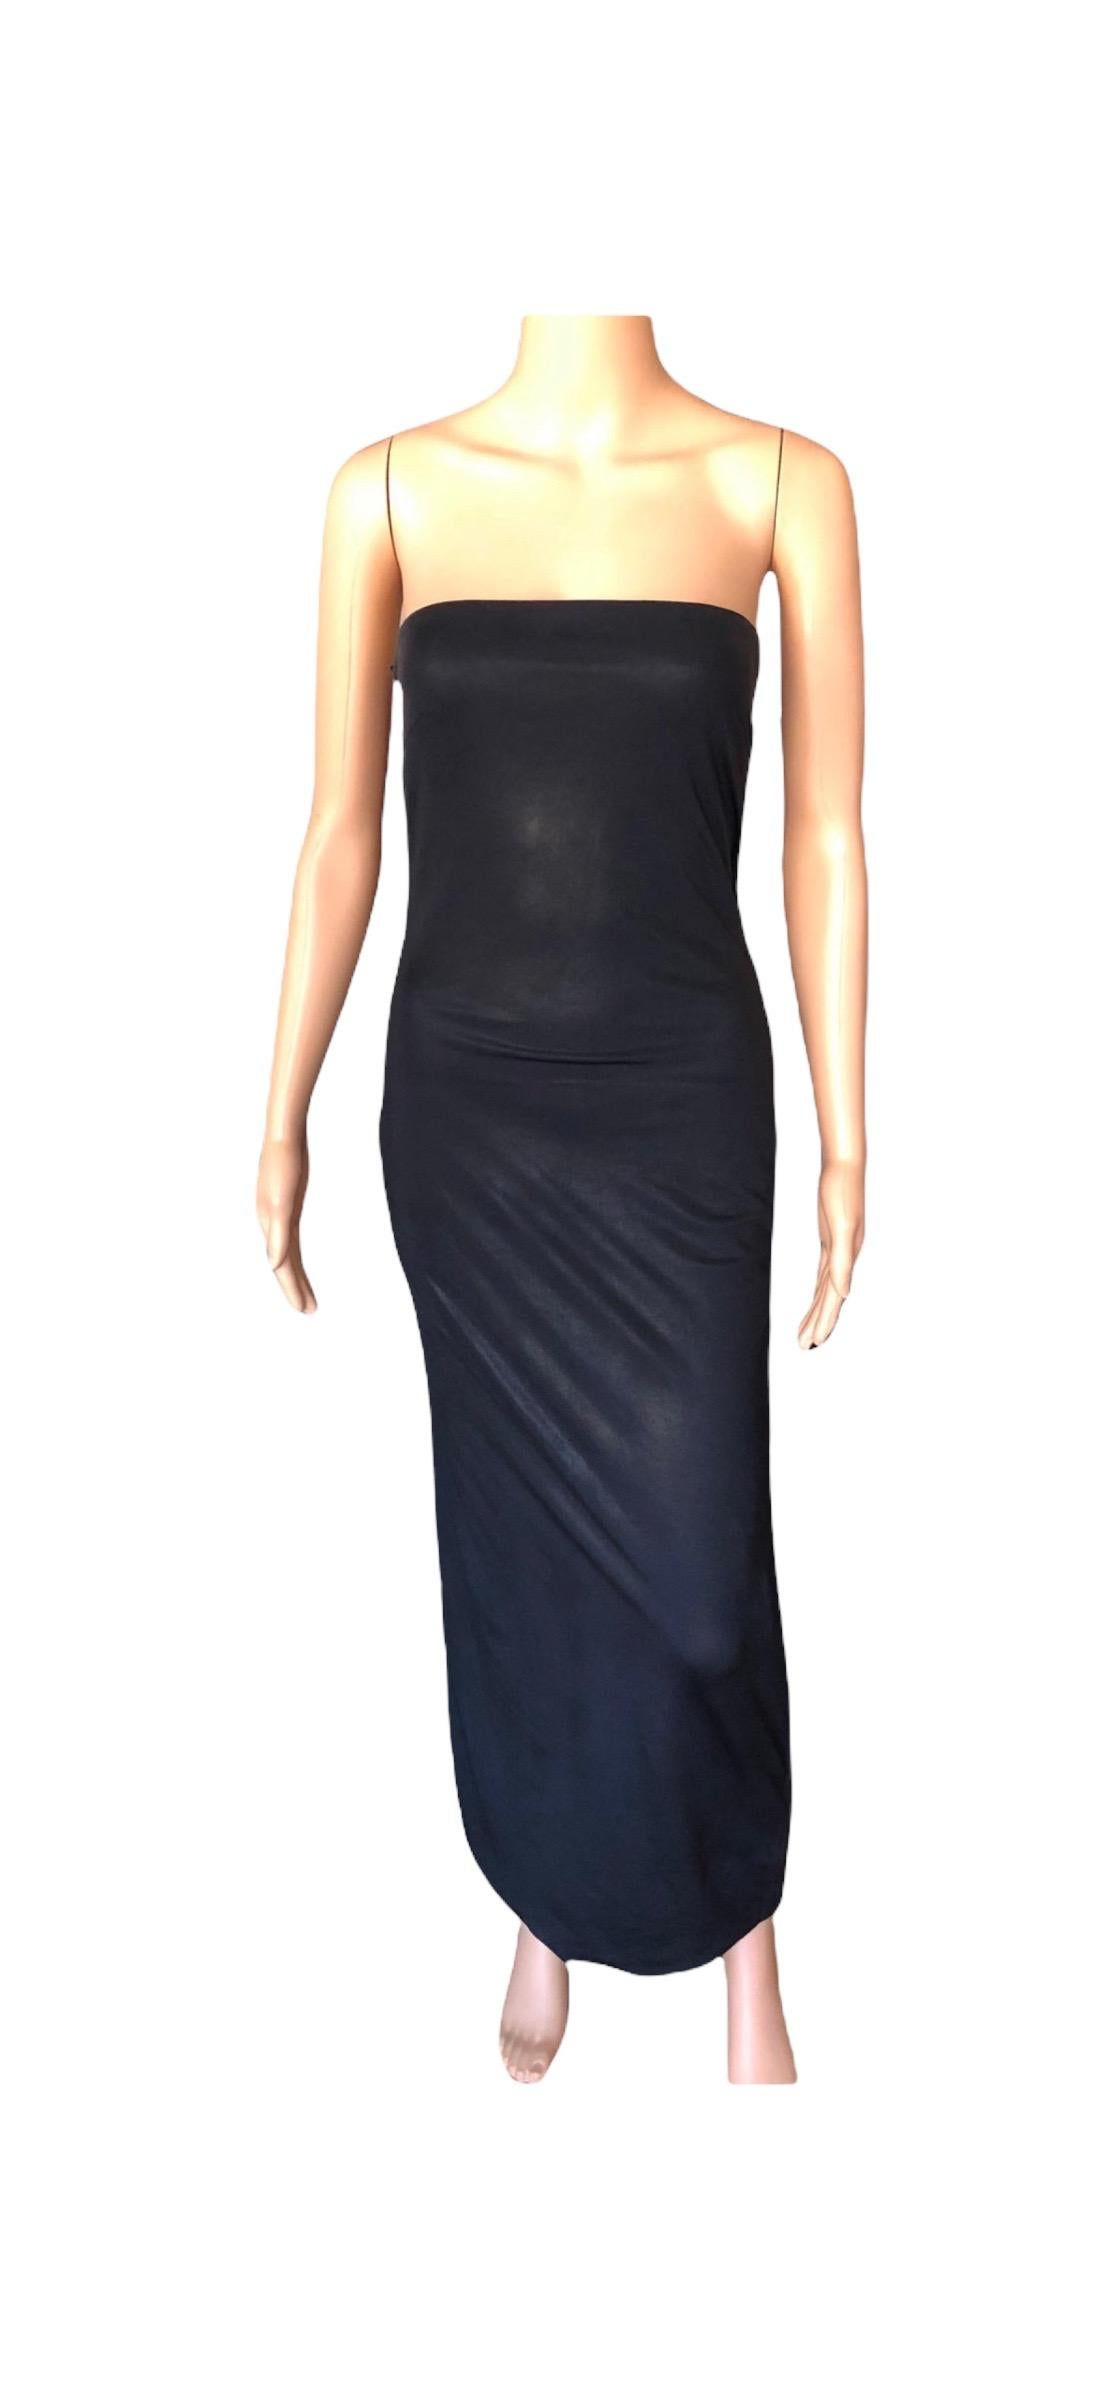 Gianni Versace S/S 1998 Runway Vintage Wet Liquid Look Cutout Evening Dress Gown 4